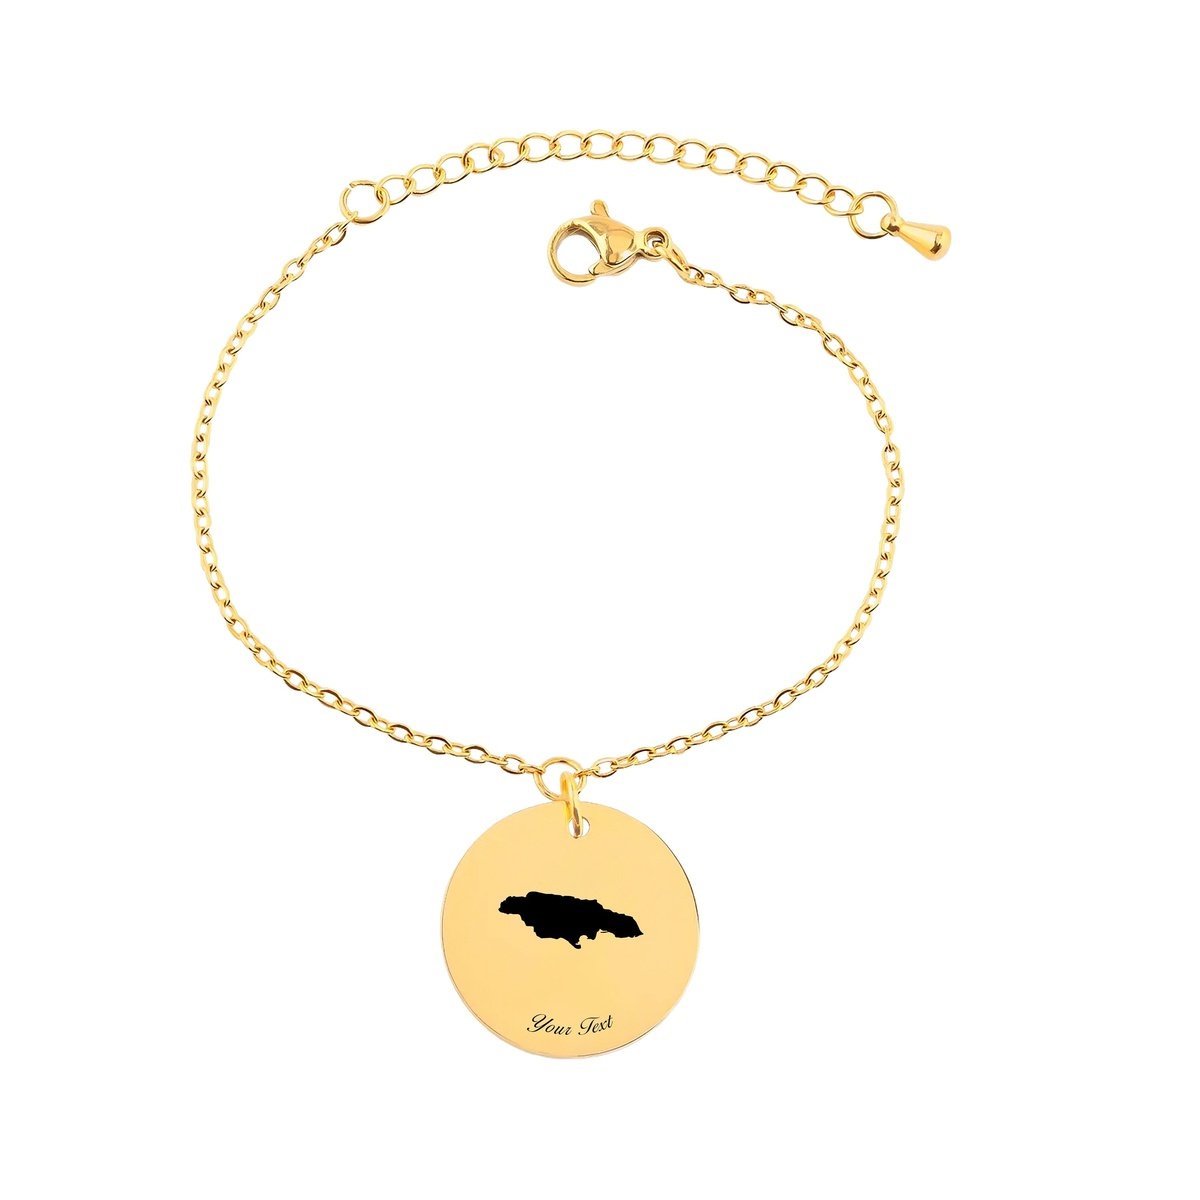 Jamaica Country Map Bracelet, Your Name Bracelet, Minimalist Bracelet, Personalized Gift, 14K Gold Bracelet, Gift For Him Her